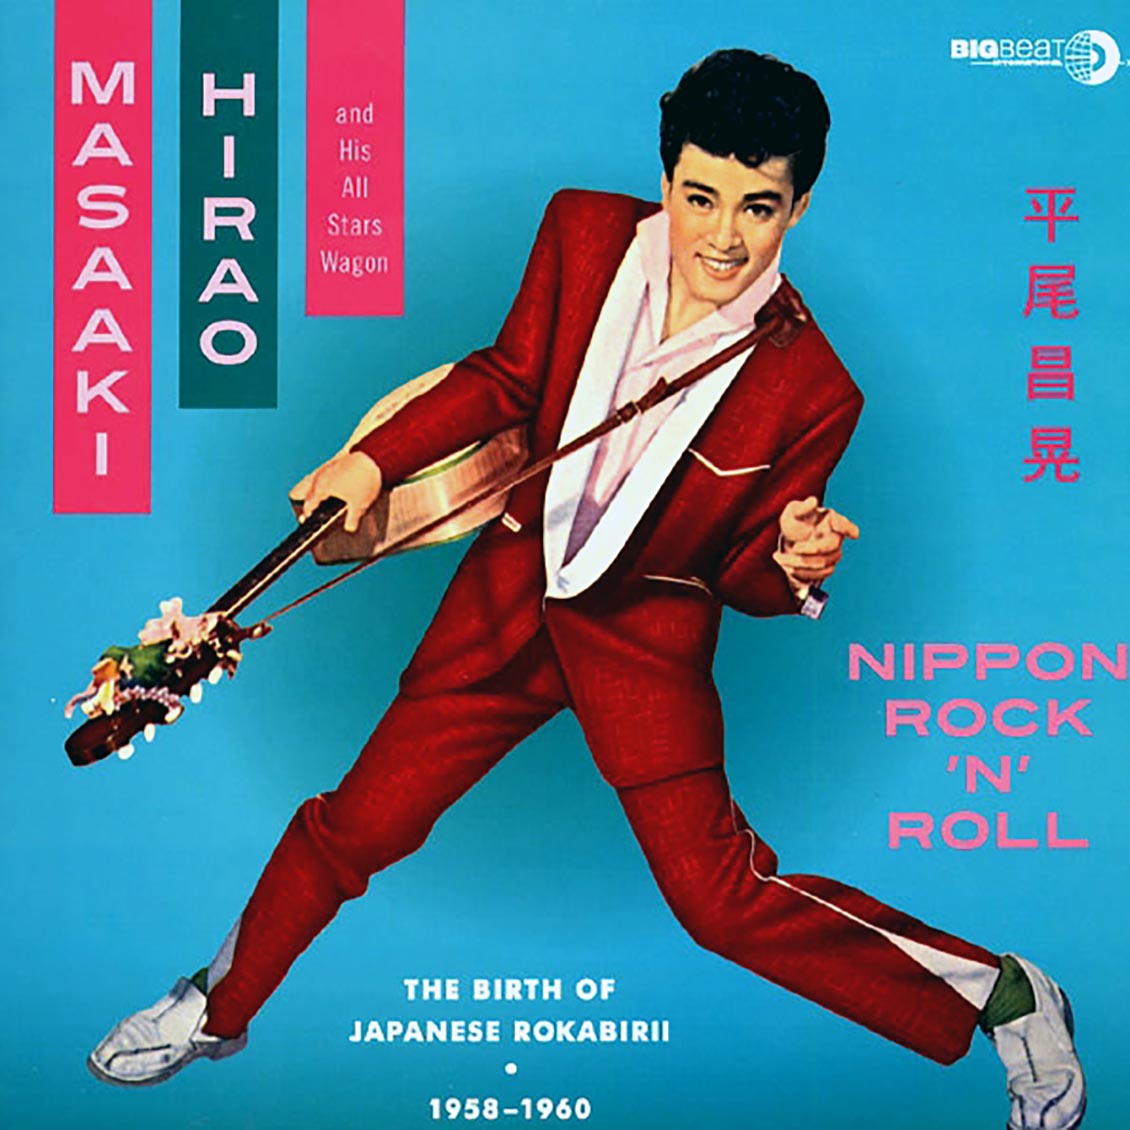 Masaki Hirao & His All Stars Wagon - Nippon Rock 'N' Roll: The Birth Of Japanese Rokabirii 1958-1960